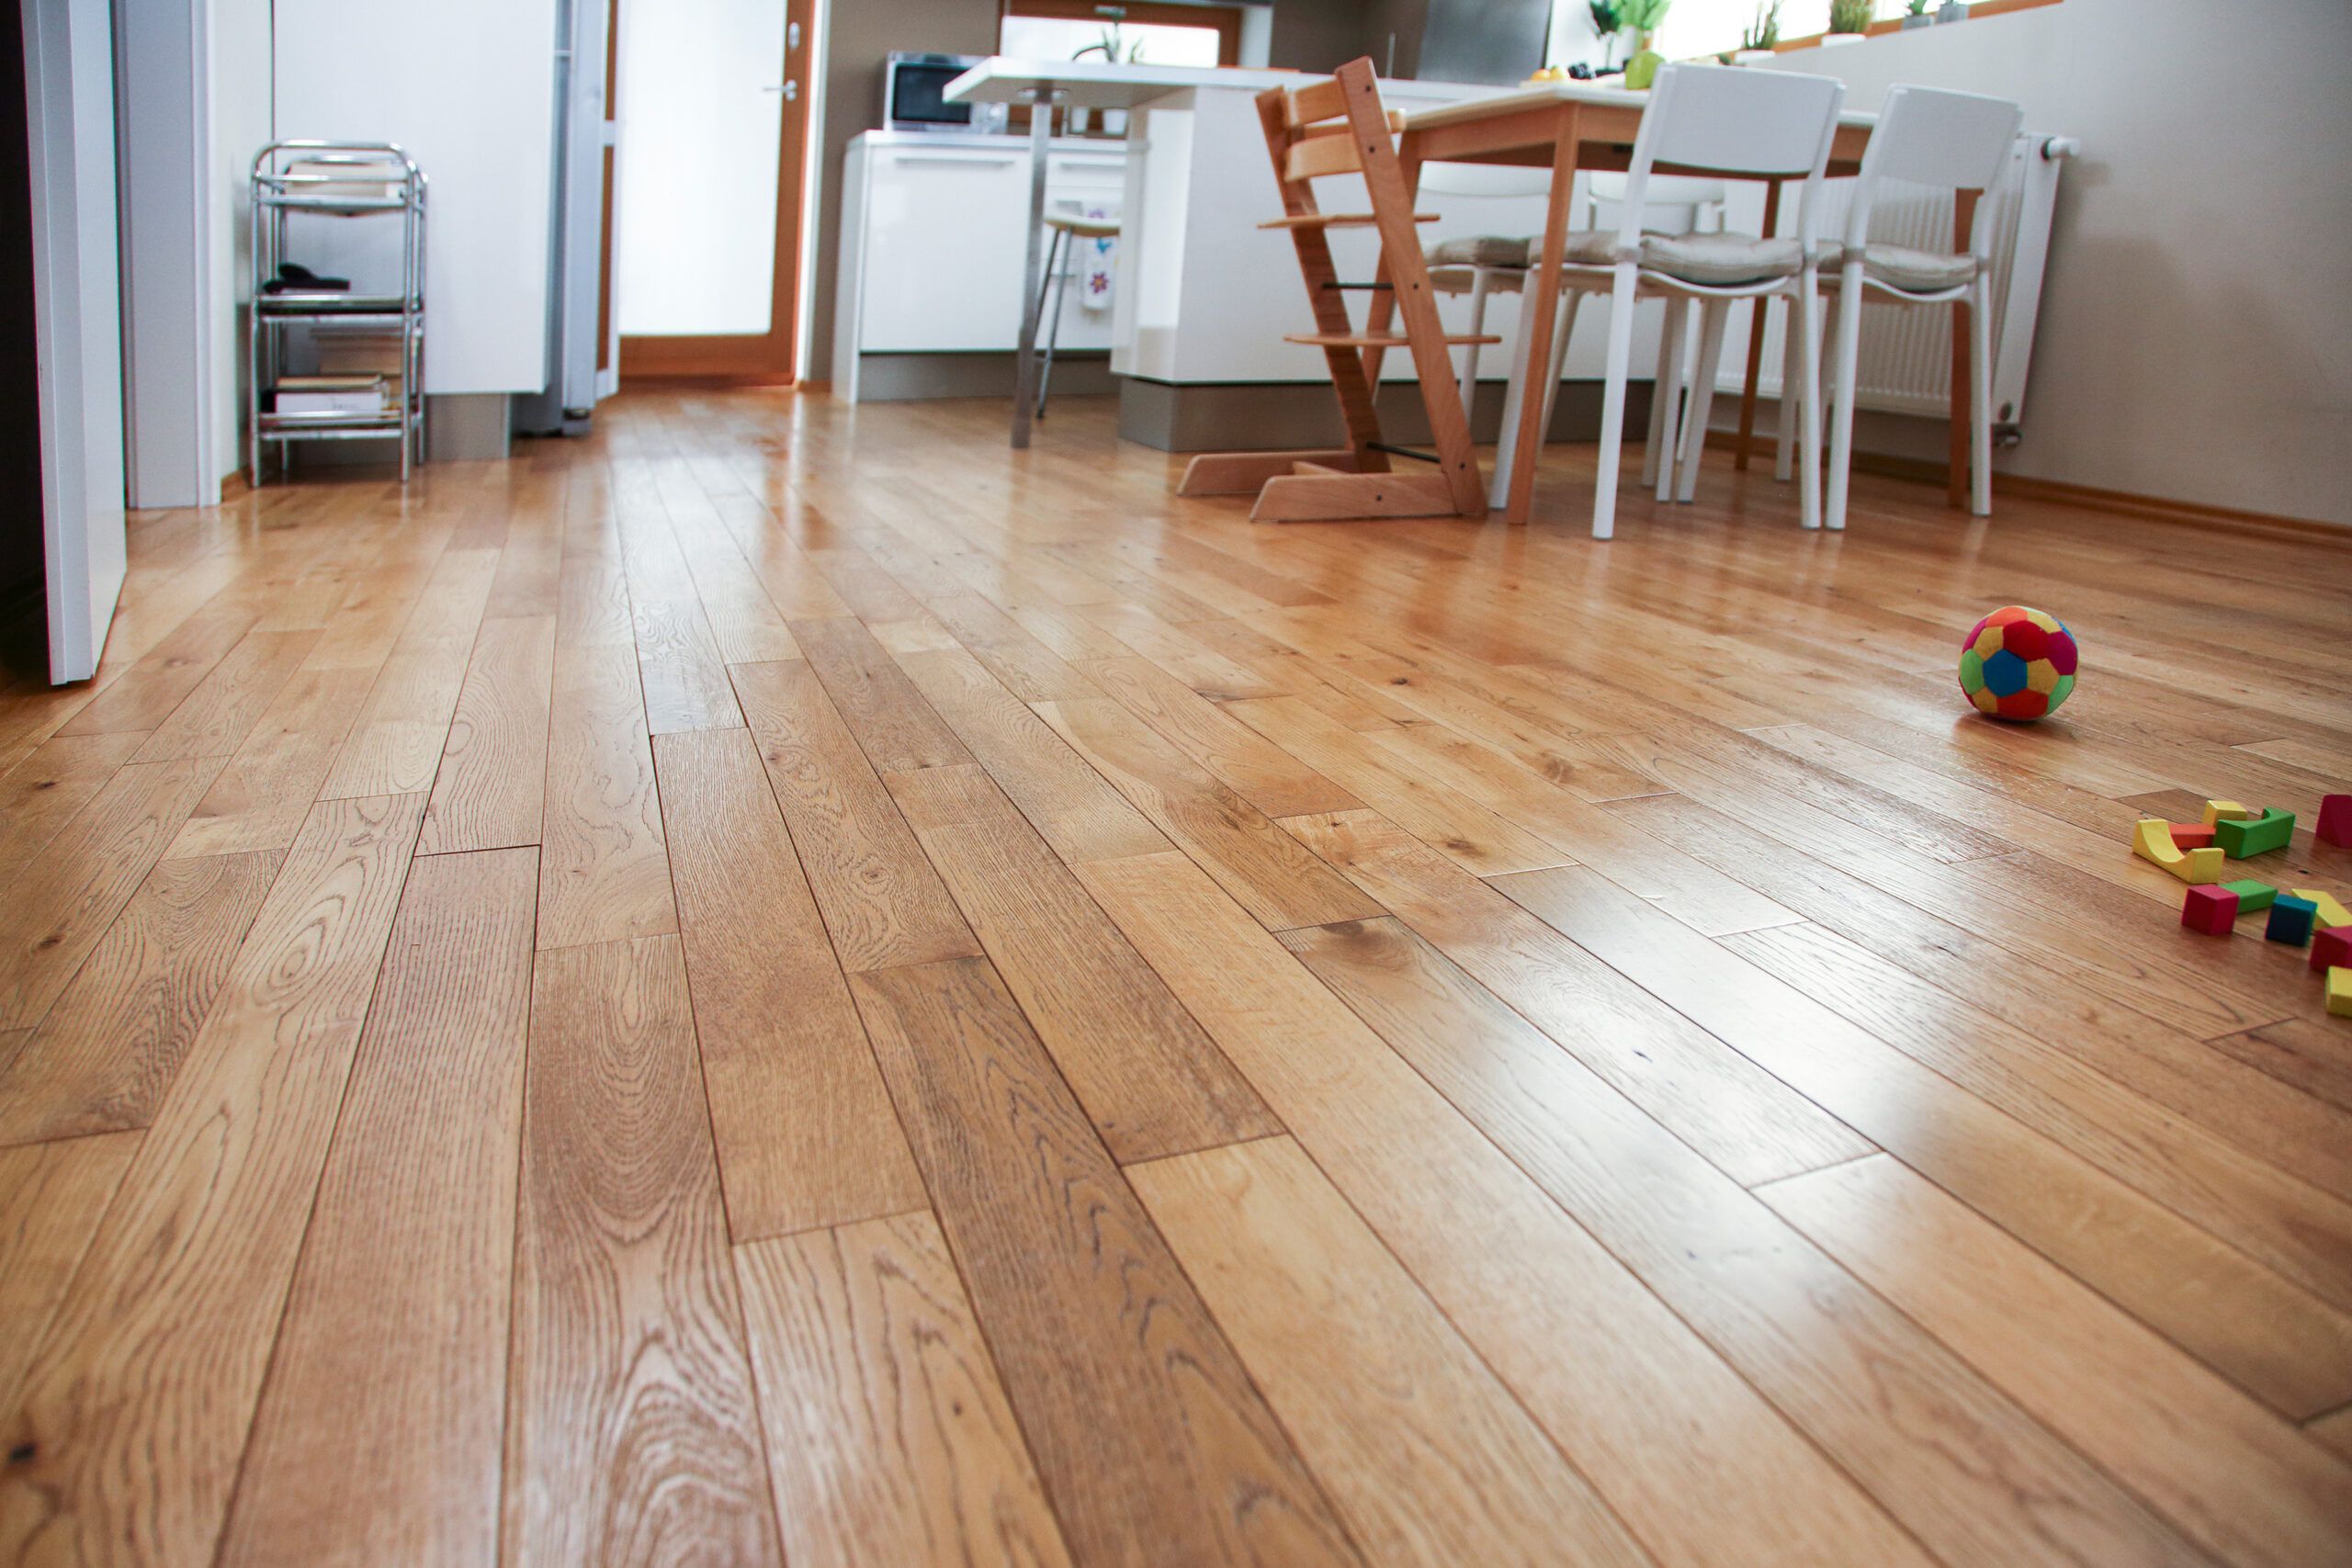 Why Hardwood Flooring is Superior